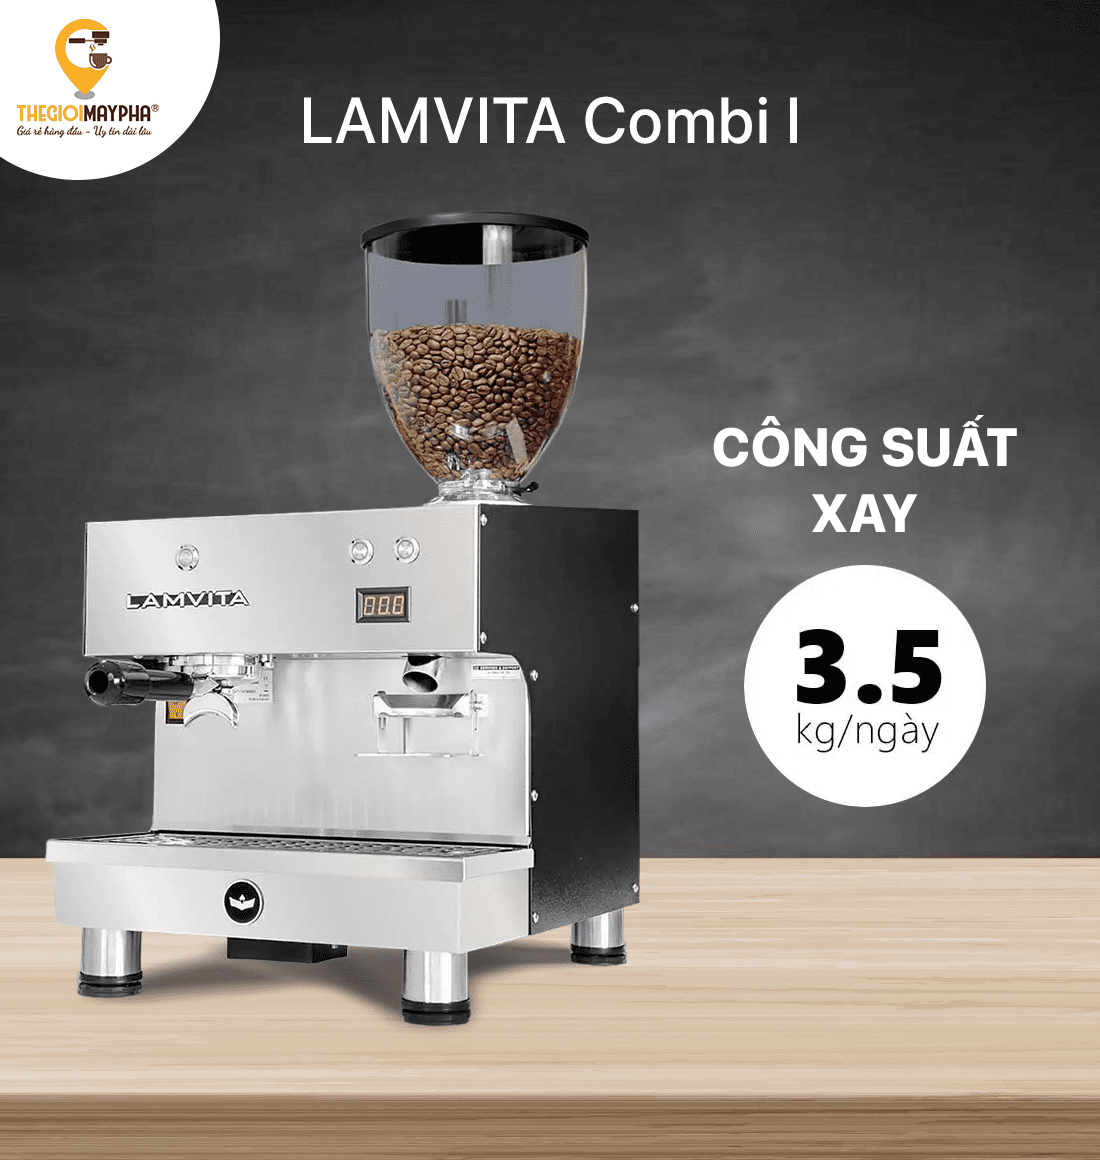 Máy pha cà phê Lamvita Combi I